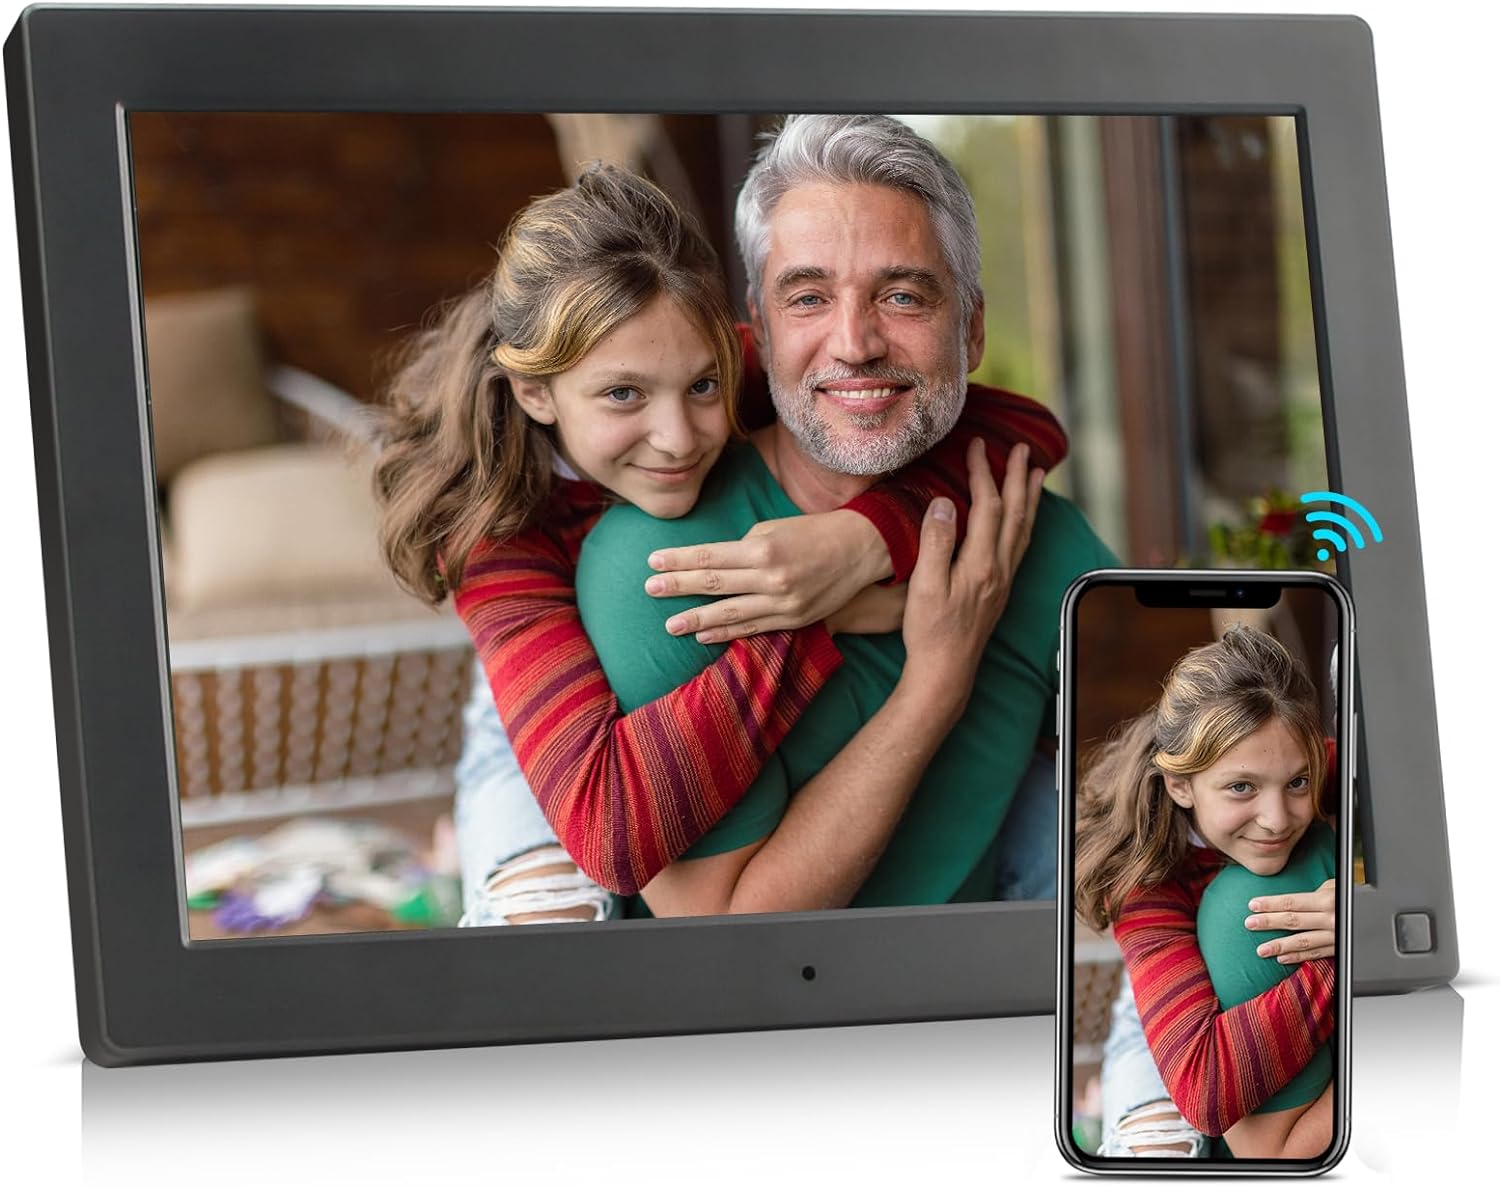 BSIMB Smart Wi-Fi HD Picture Frame 10.1 Inch - $55